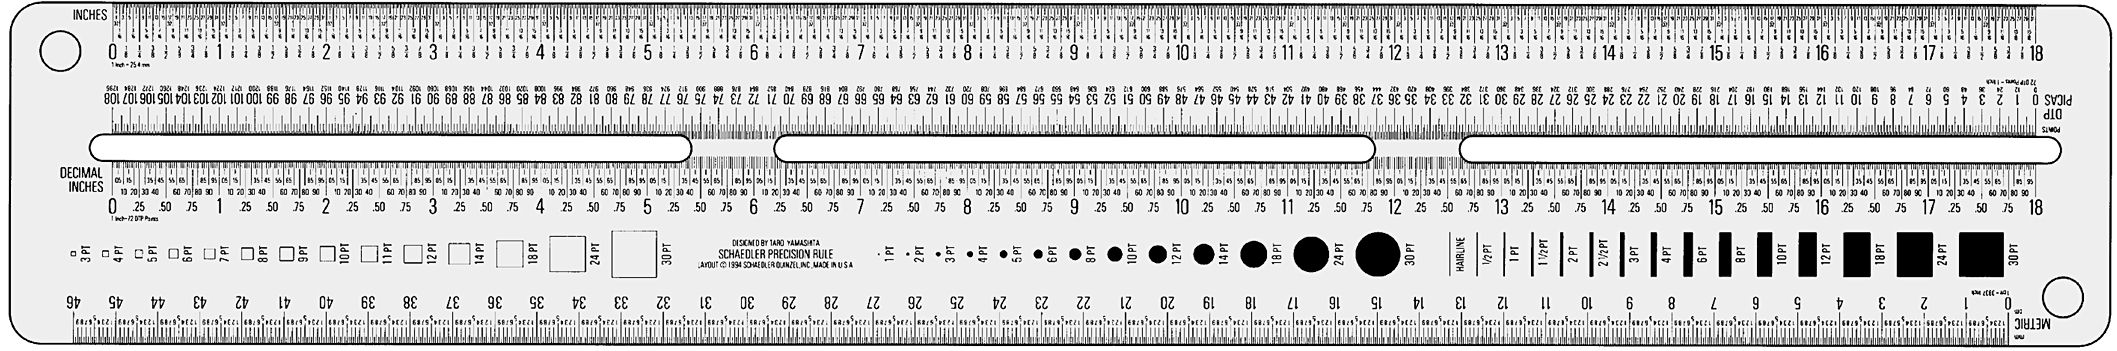 Schaedler Precision Ruler Set